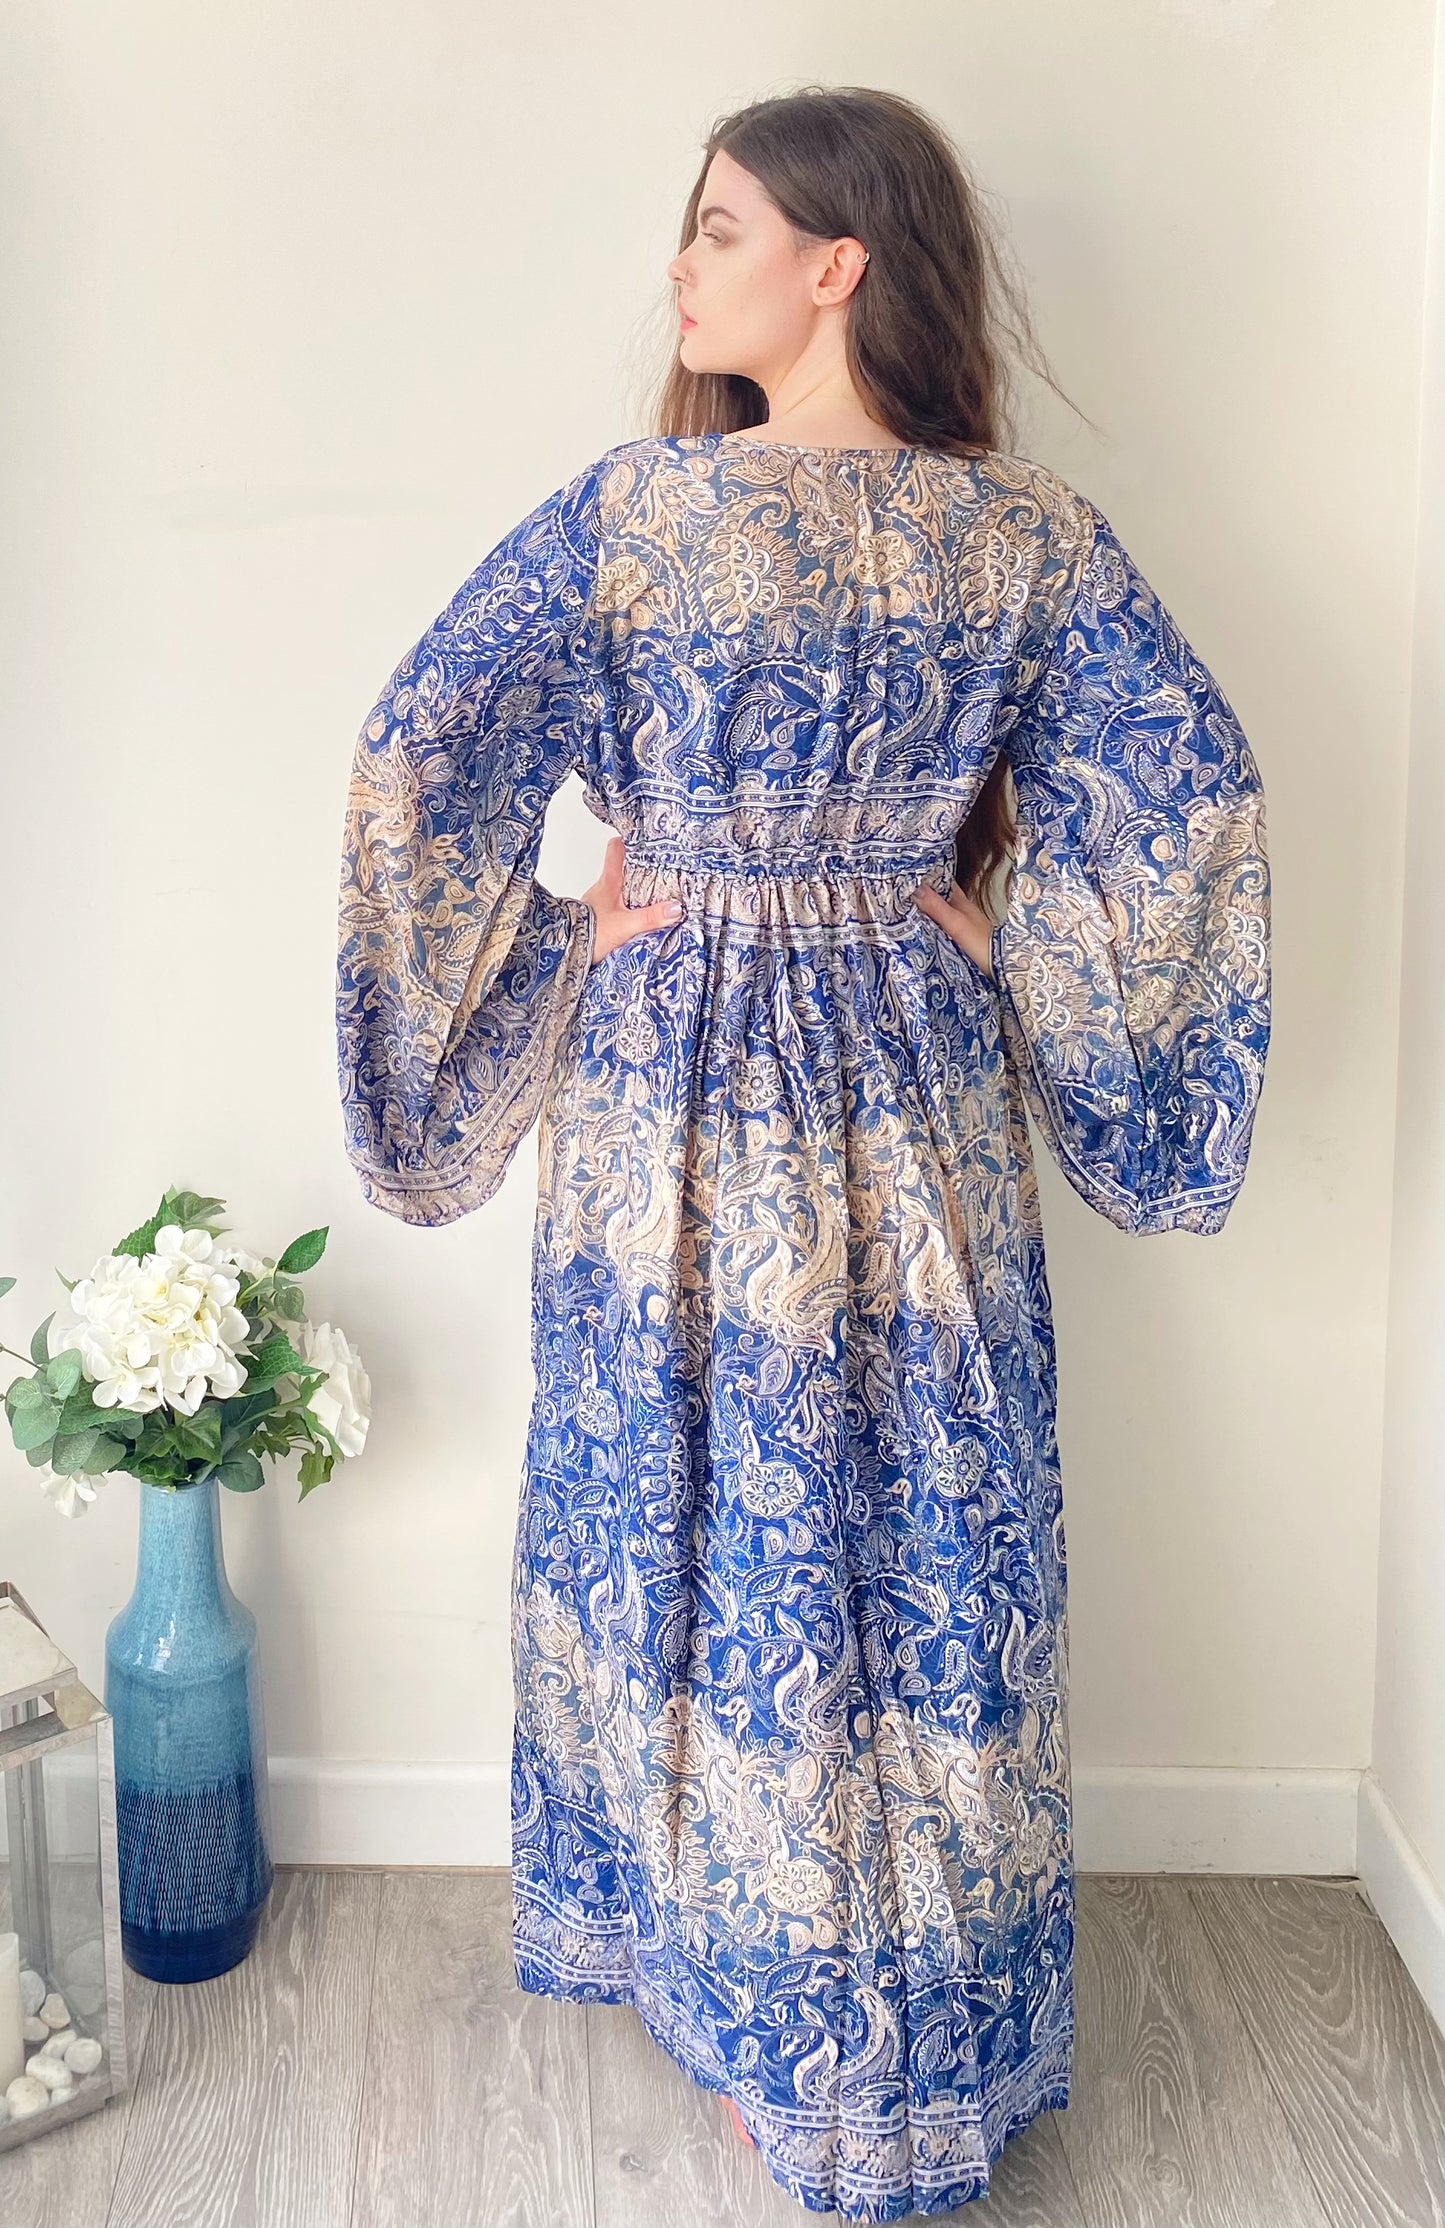 Nova cream blue paisley-print silk maxi dress free size UK8-16